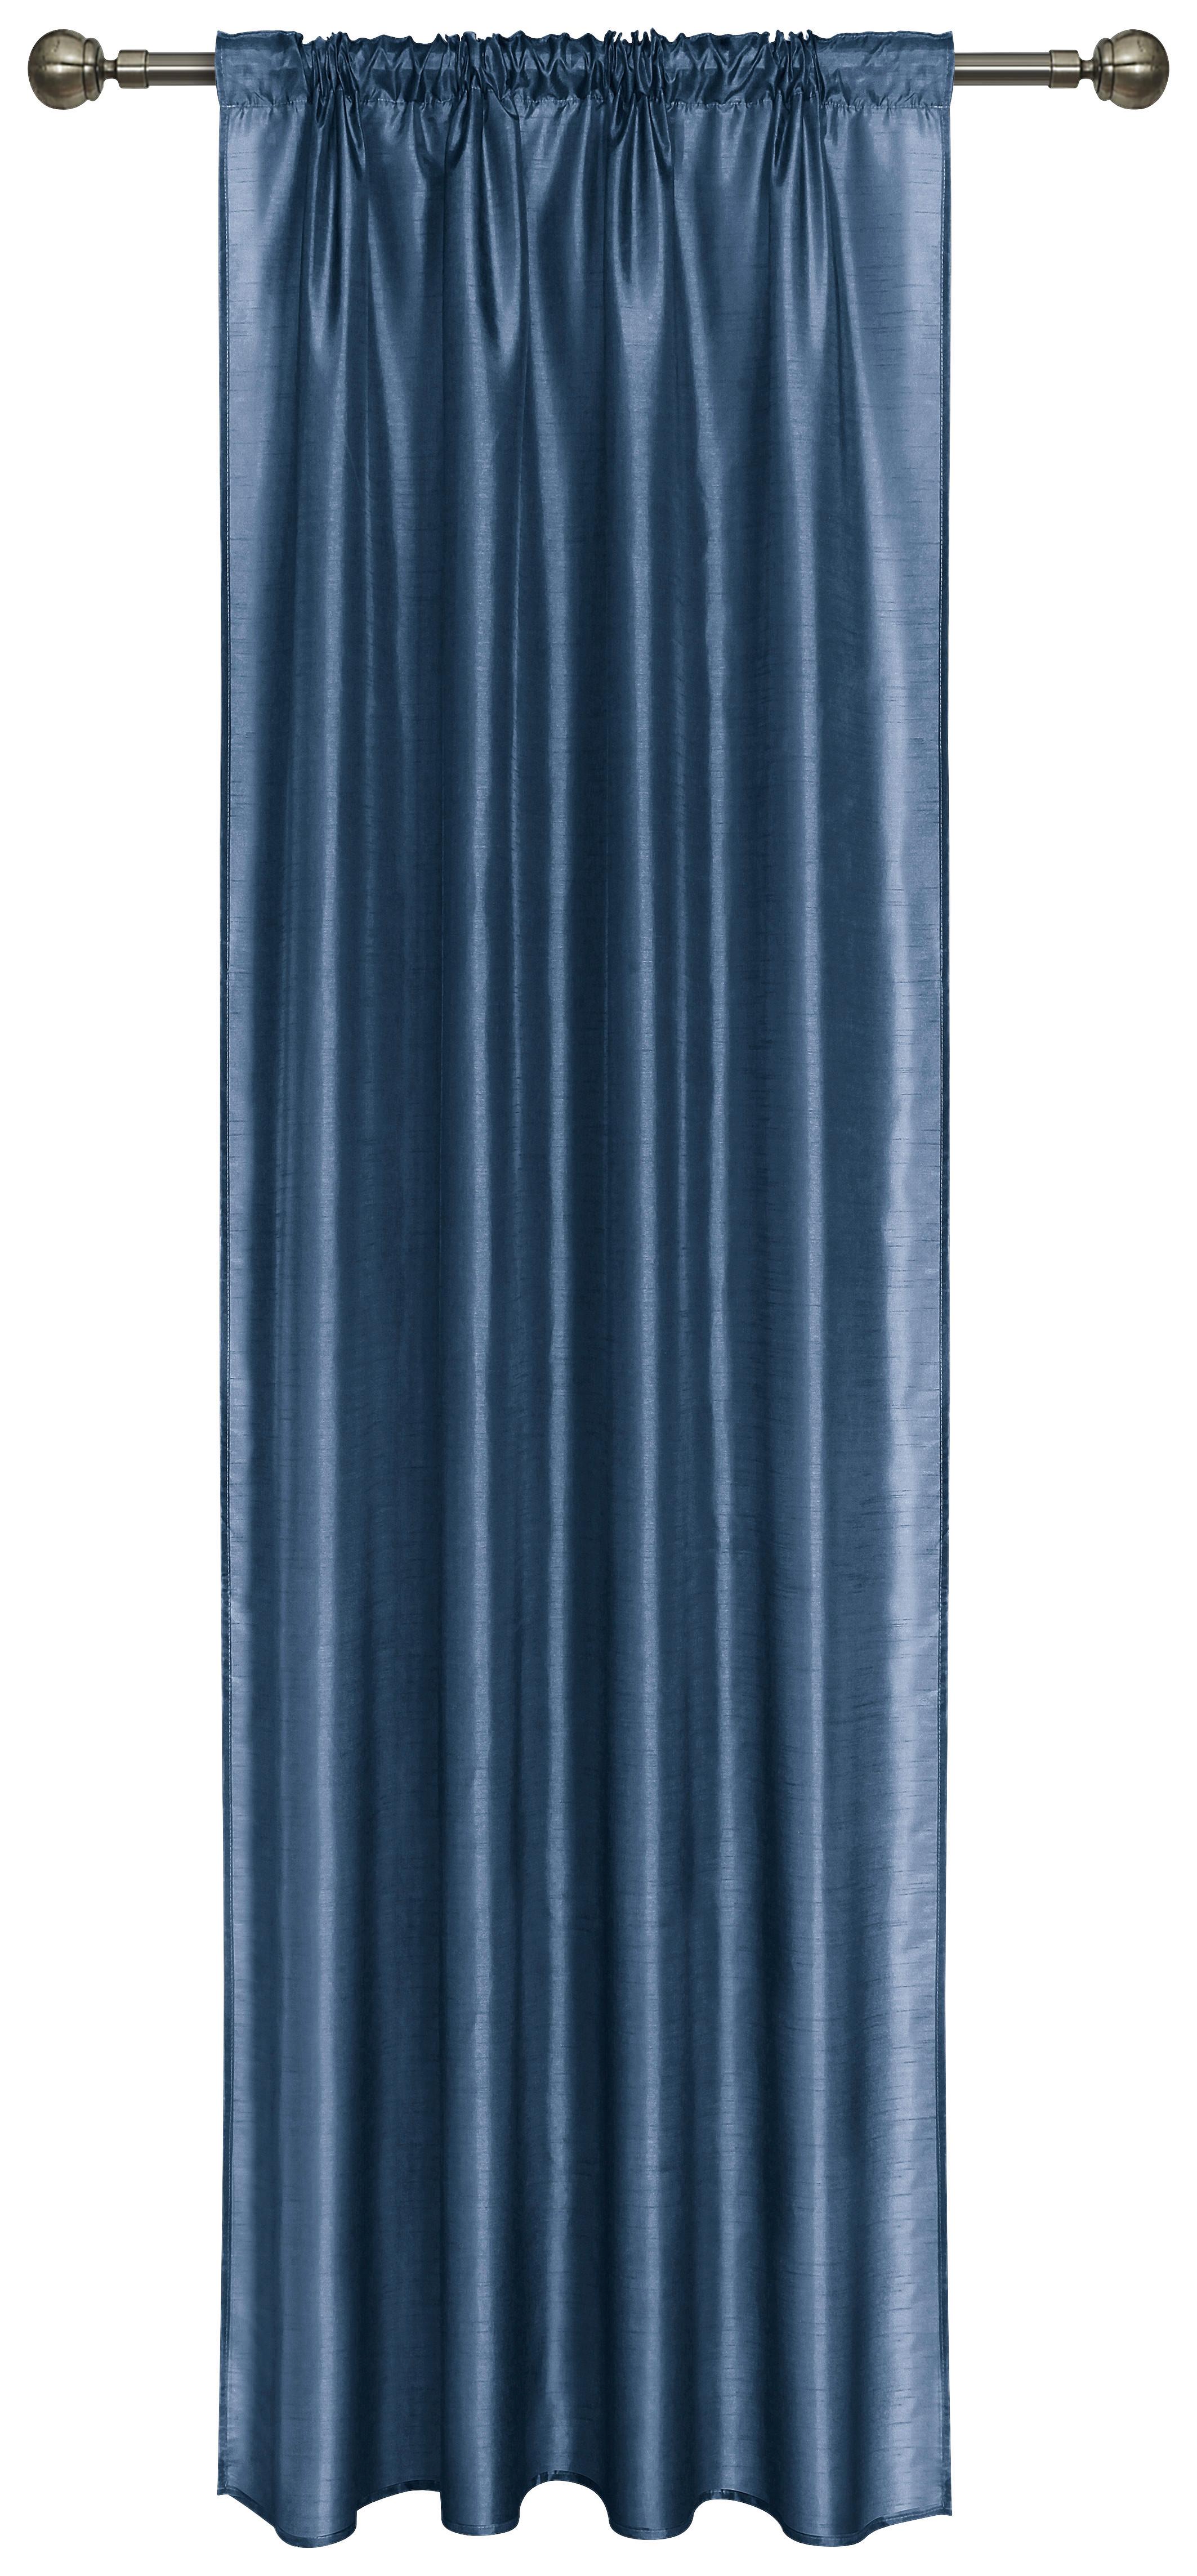 Fertigvorhang Mit Ösen Ulla 140x245 cm Blau - Blau, ROMANTIK / LANDHAUS, Textil (140/245cm) - James Wood